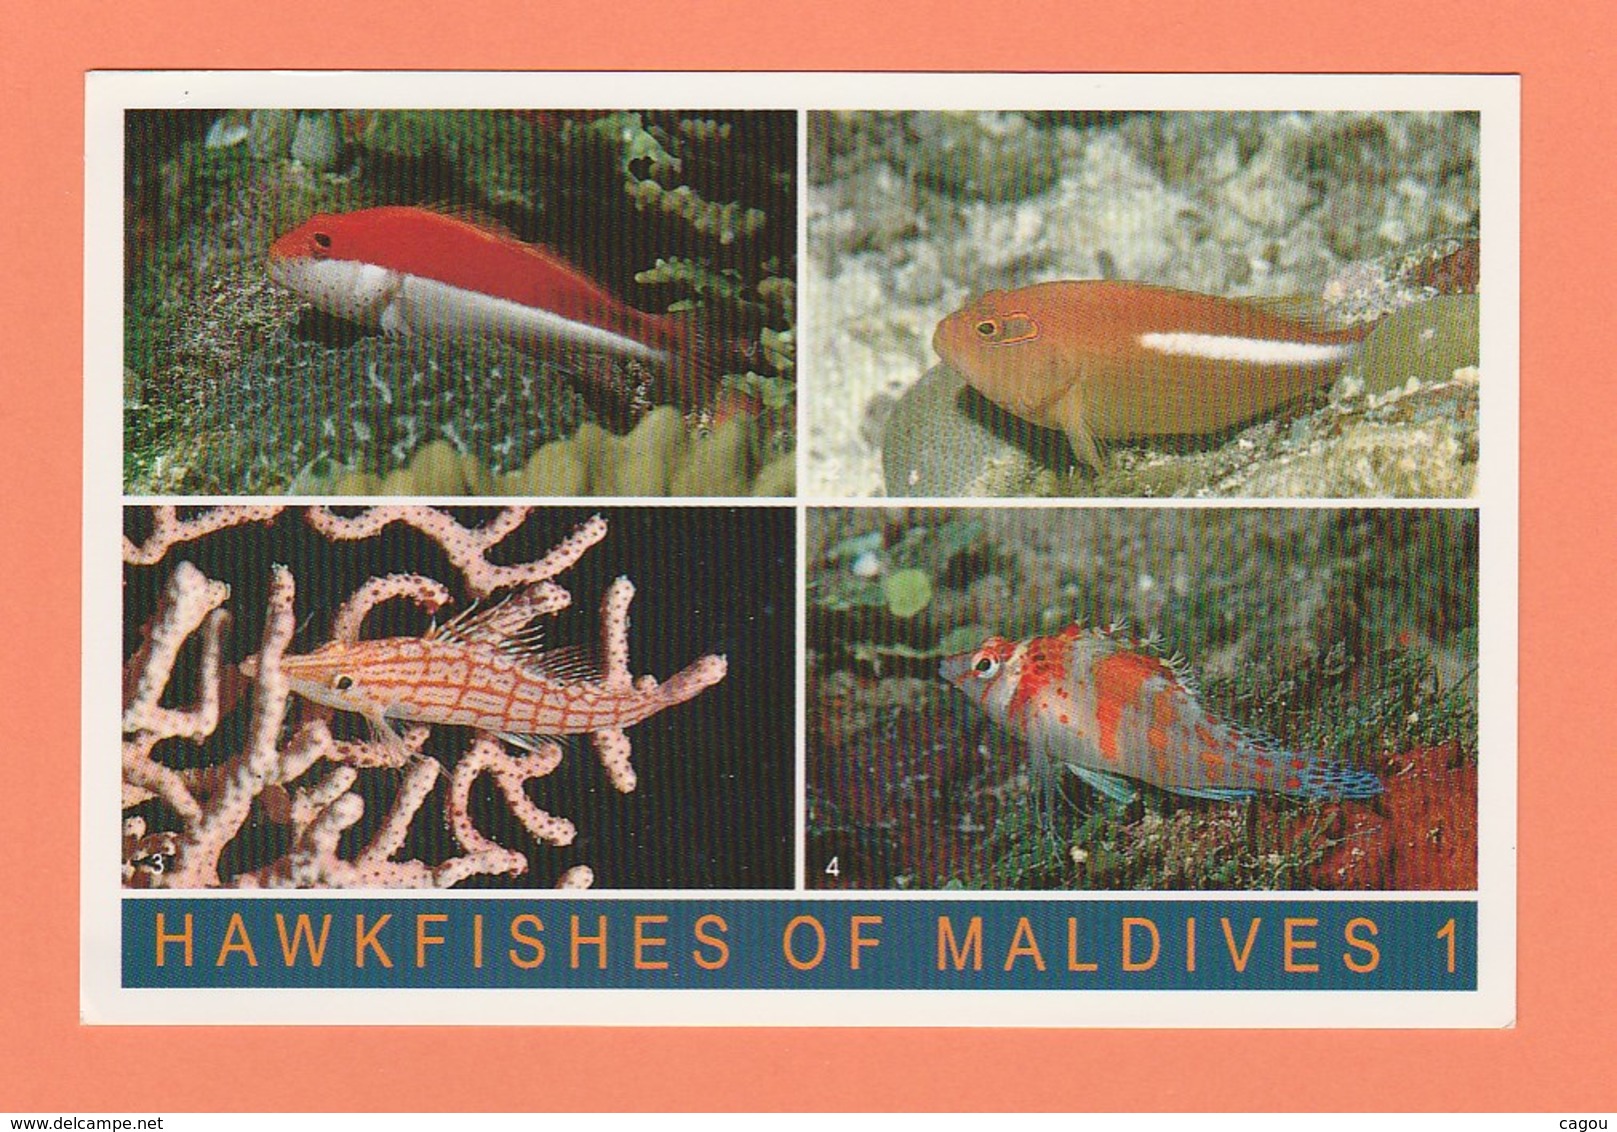 MALDIVES - HAWKFISHES OF MALDIVES 1 - Maldive